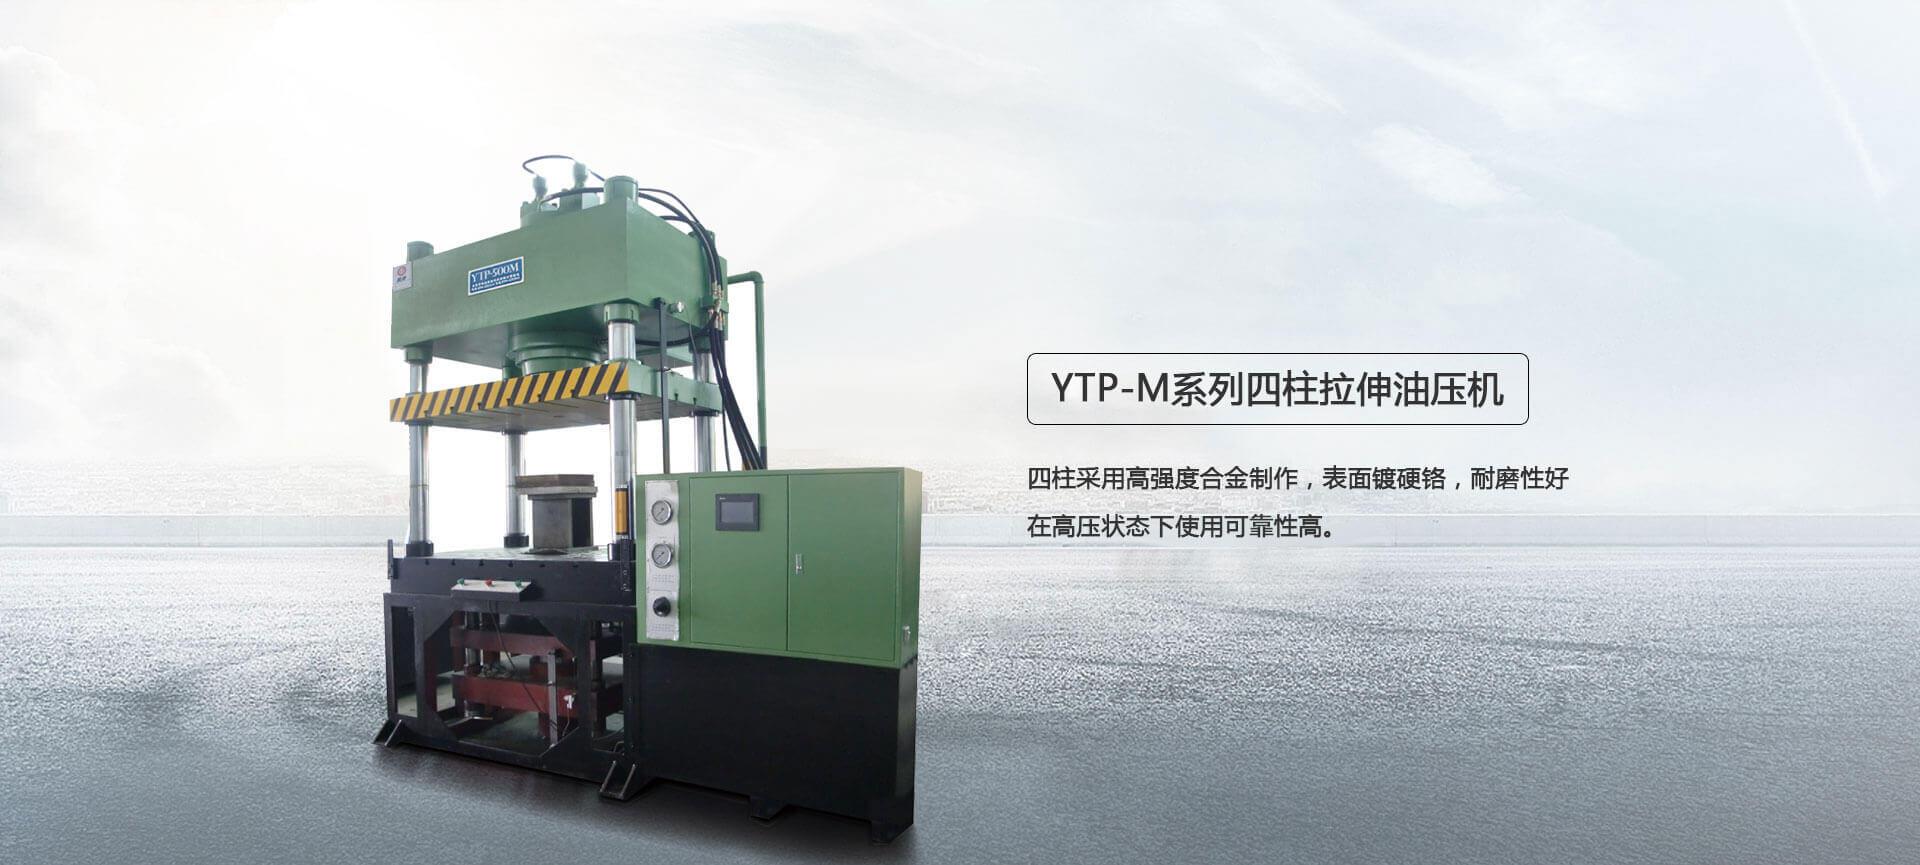 YTP-M系列四柱拉伸液壓機